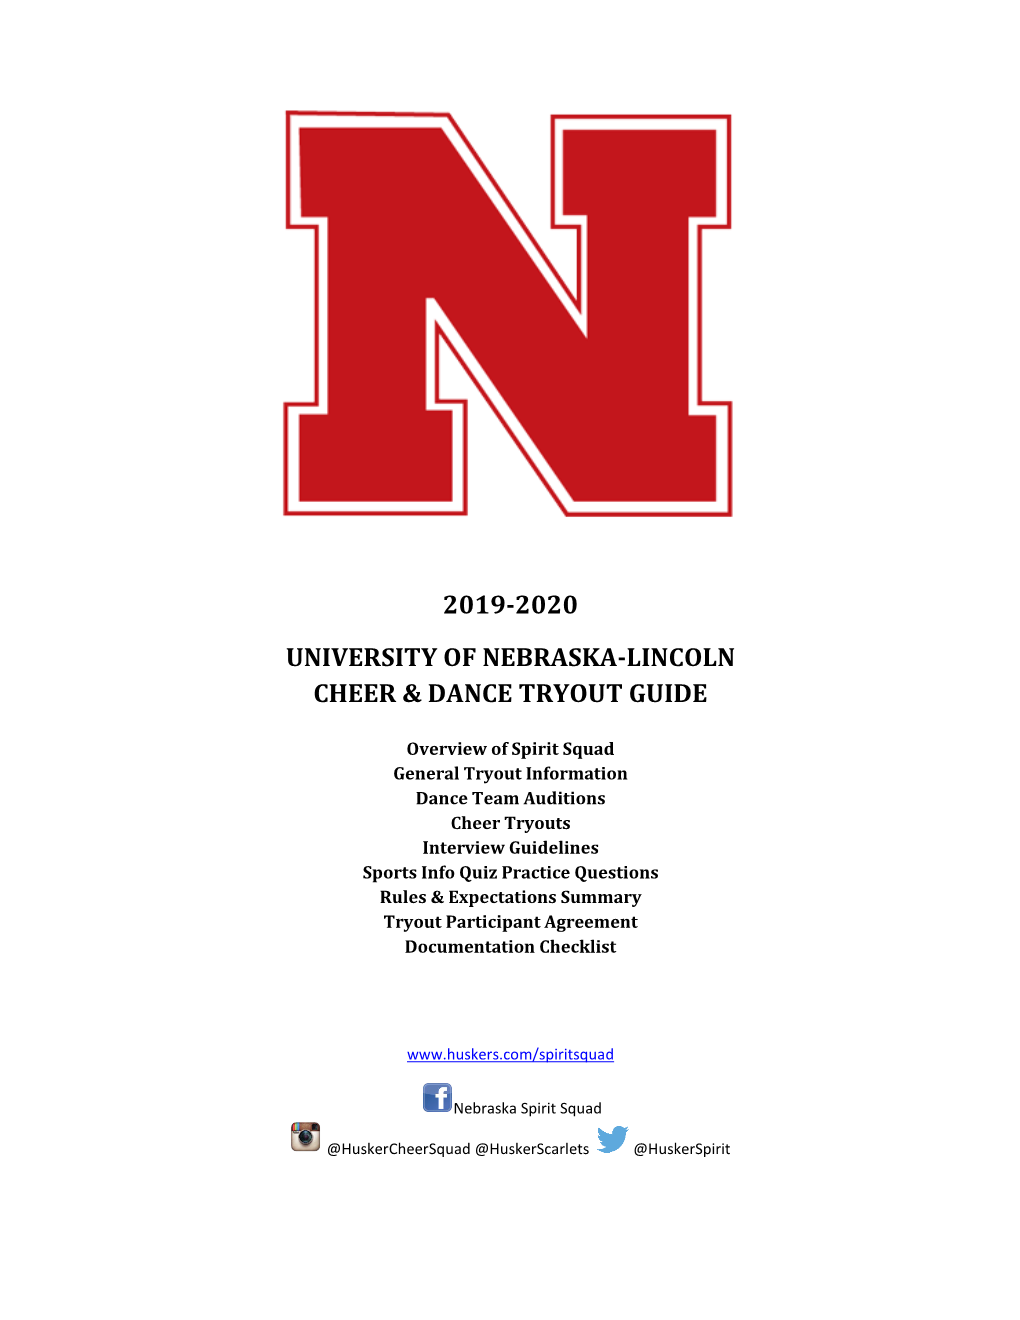 2019-2020 University of Nebraska-Lincoln Cheer & Dance Tryout Guide